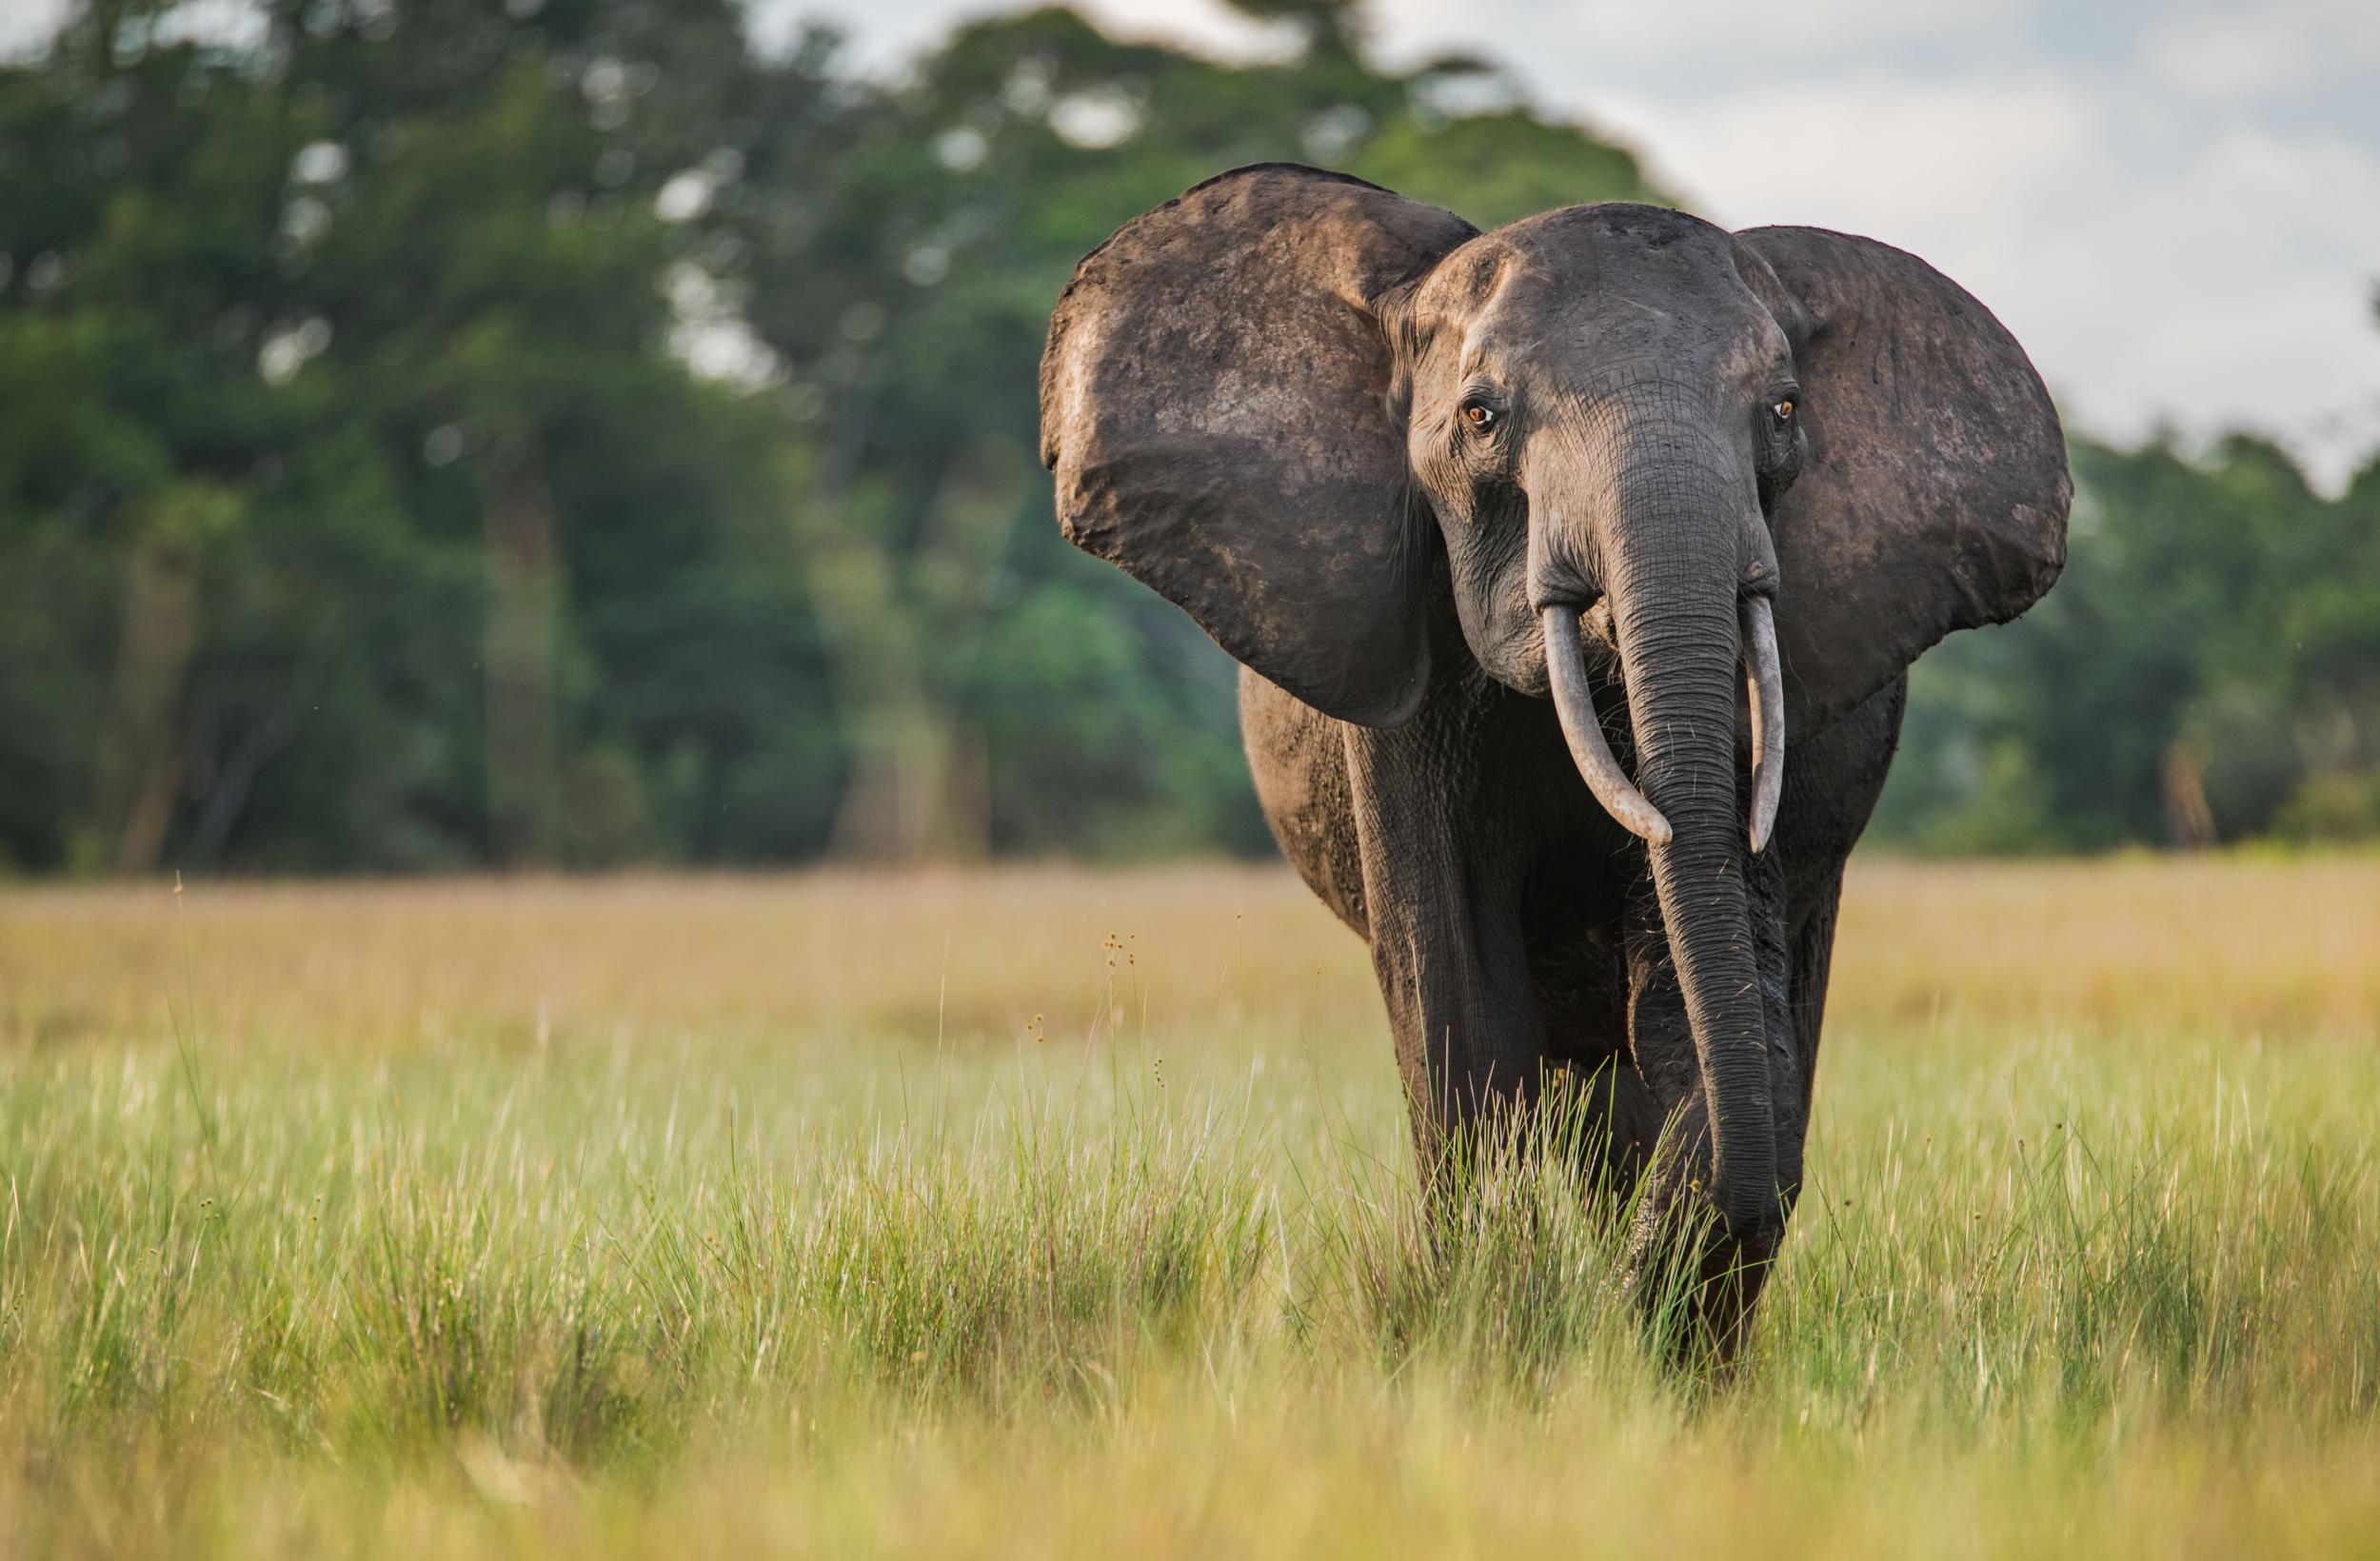 A forest elephant in Gabon's Loango National Park Safari